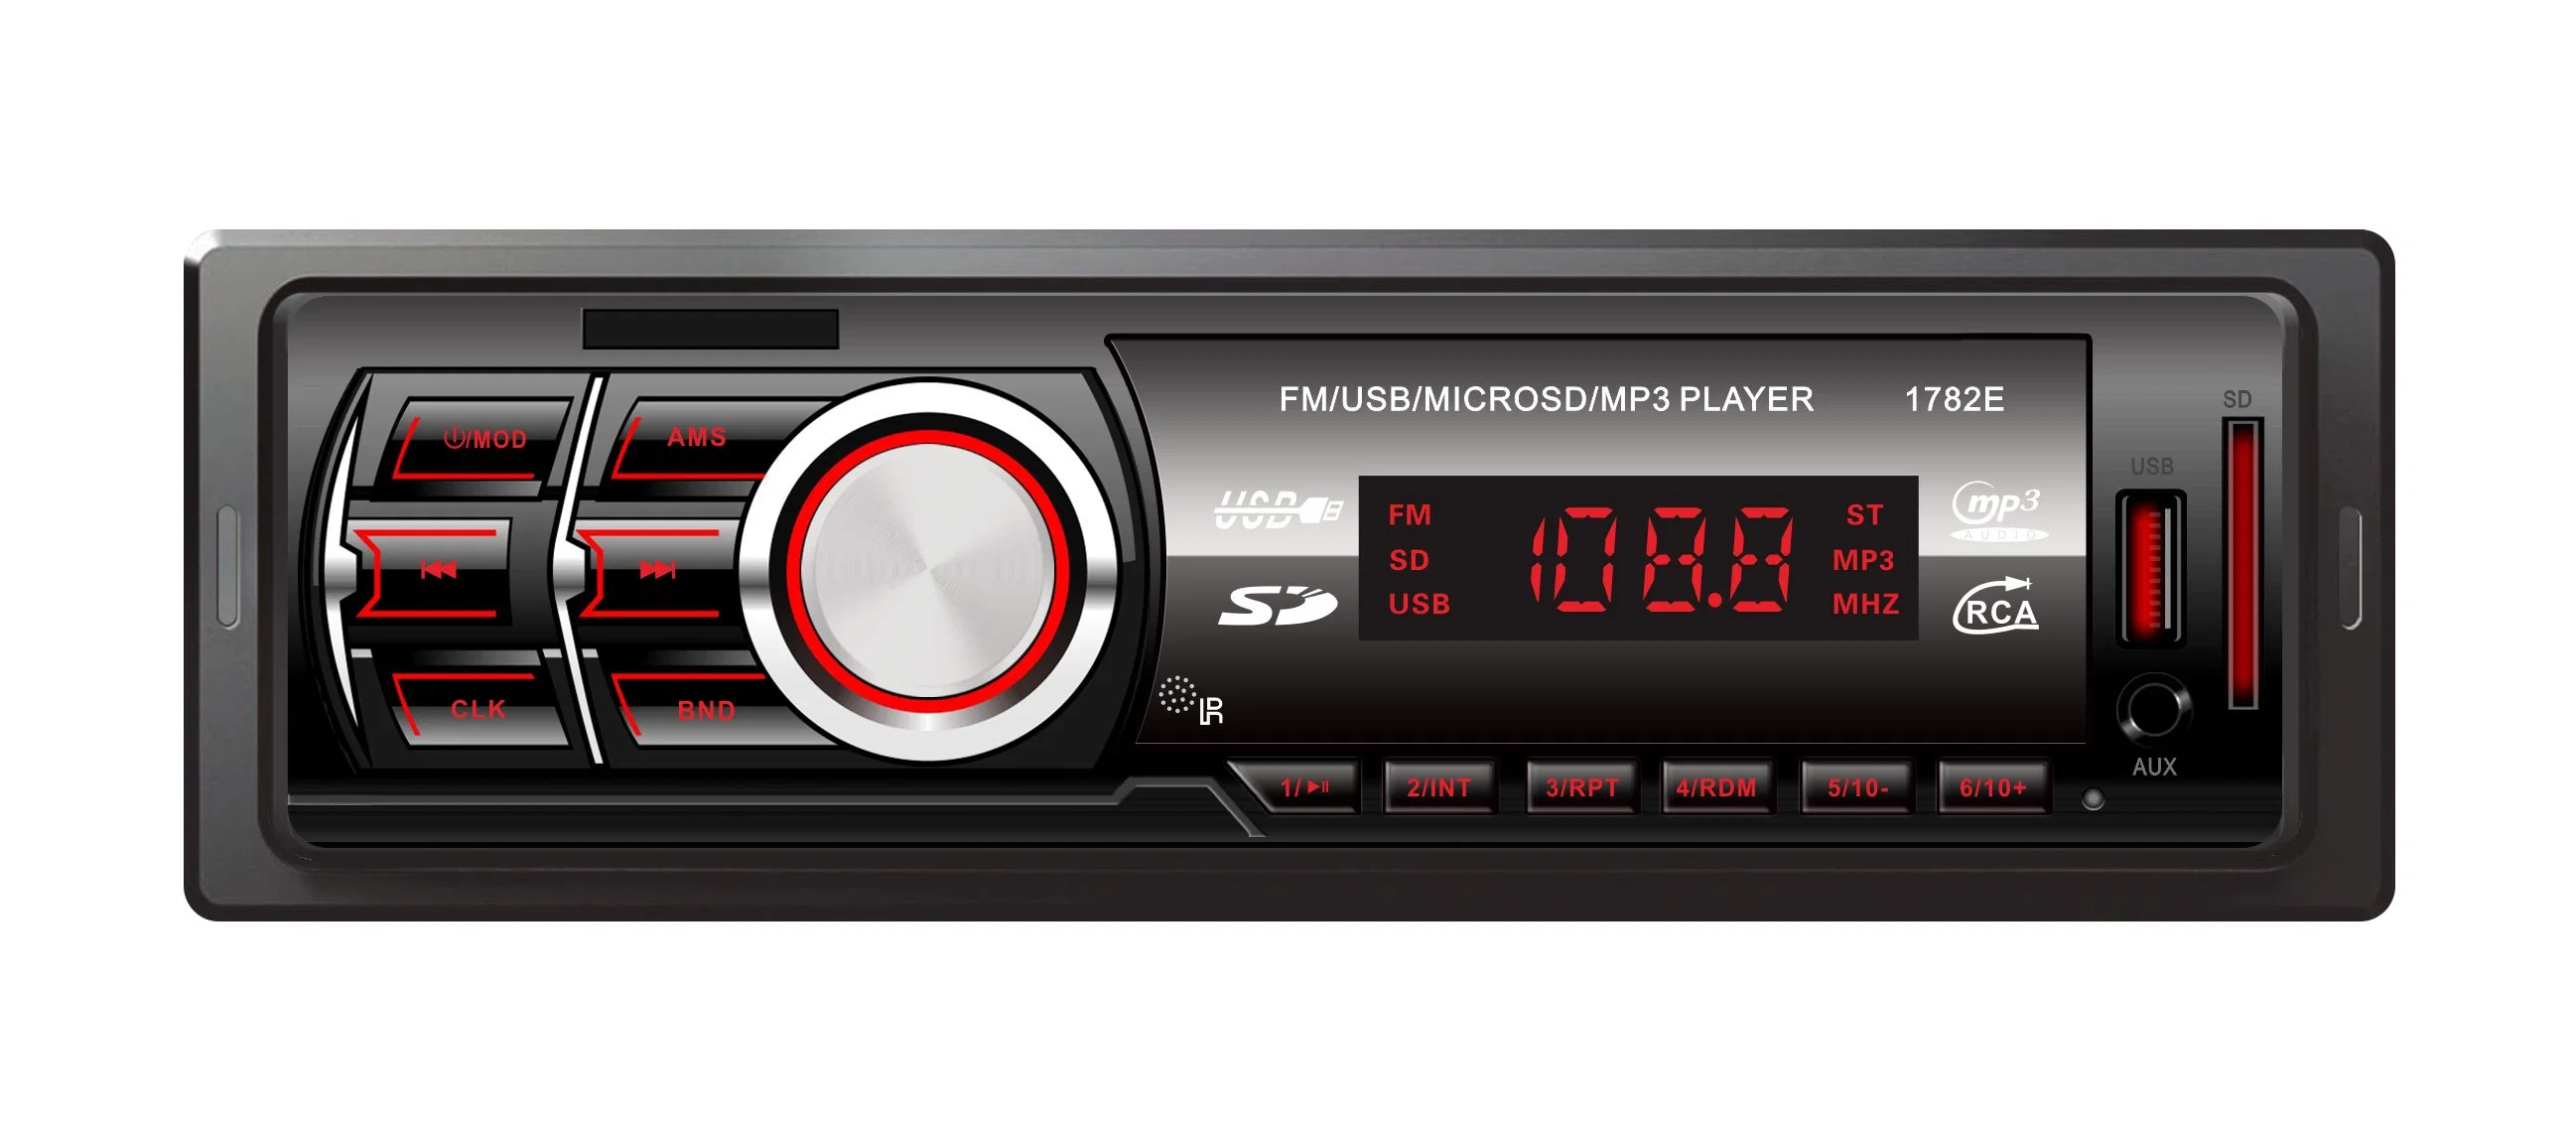 MP3-Player Audio Video Digital Auto Stereo Head Unit